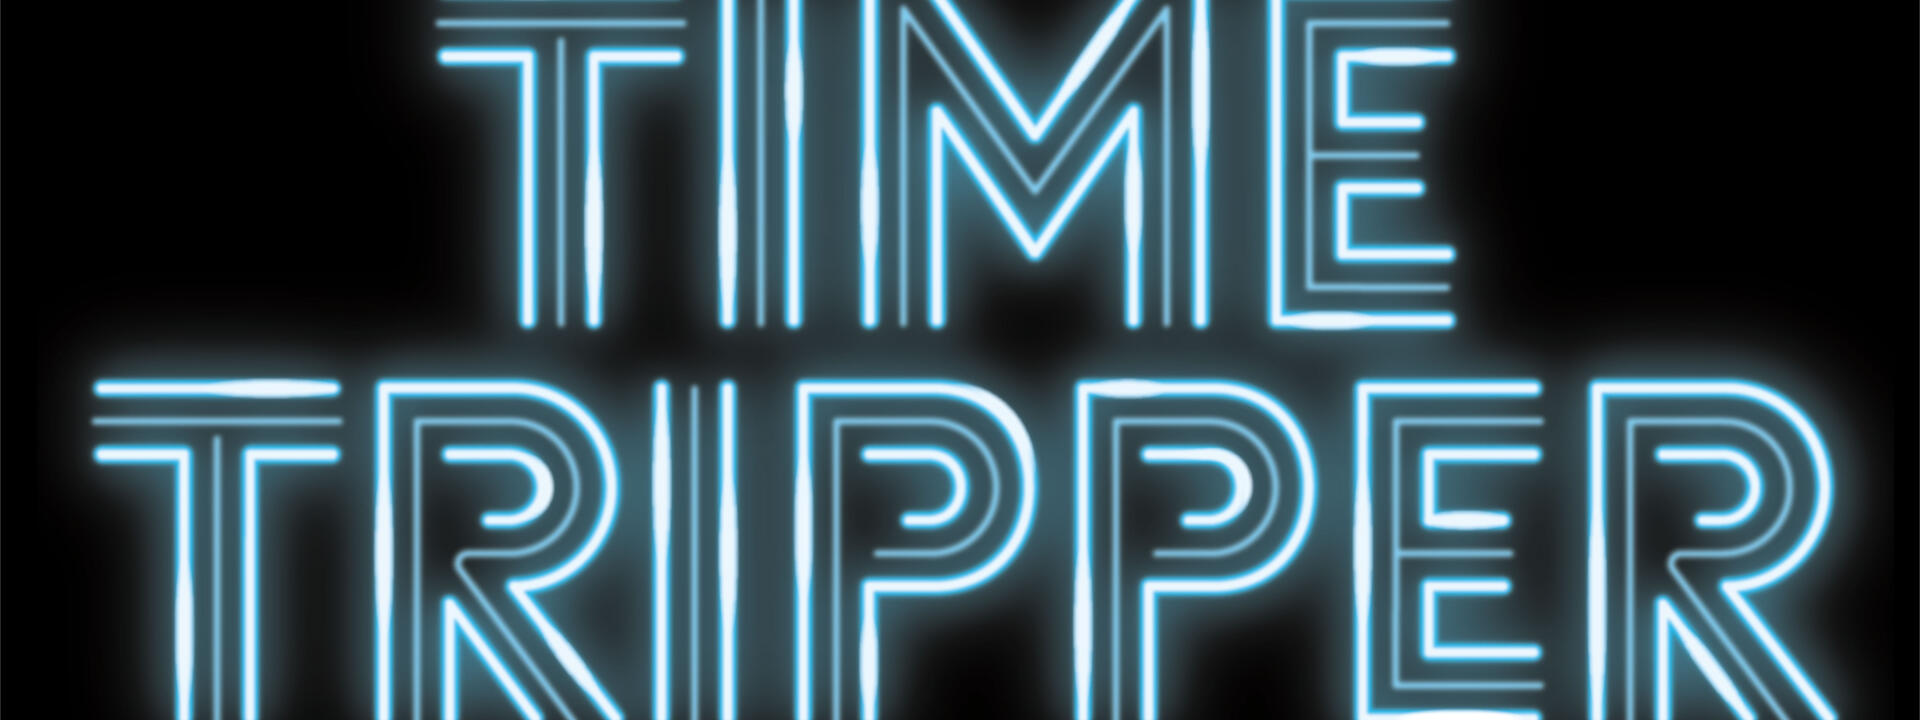 time-tripper-logo_onblack_1.jpg